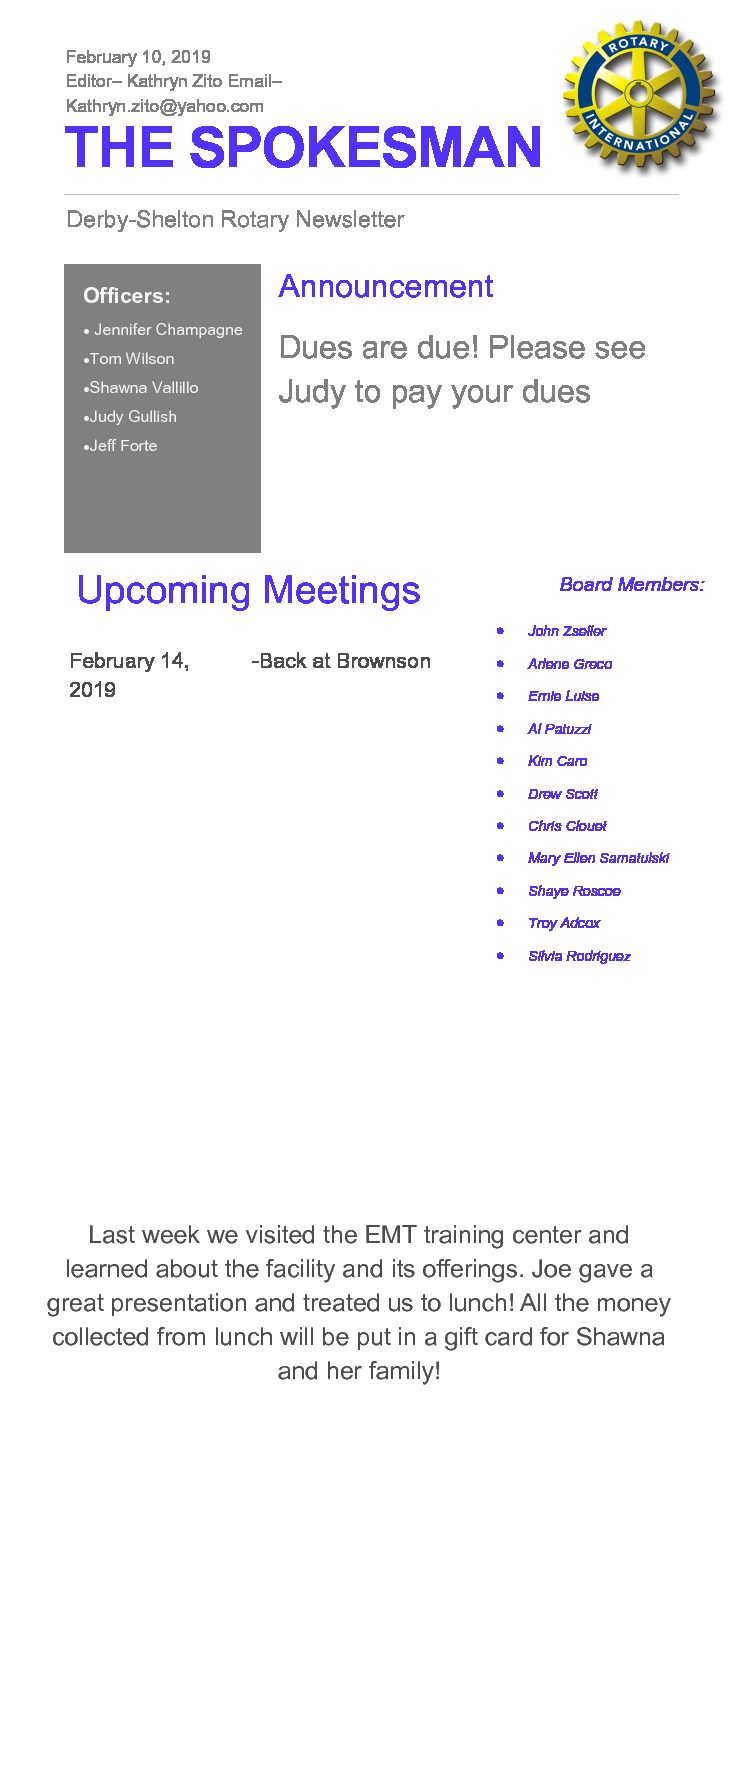 Weekly Meetings Continue Virtually